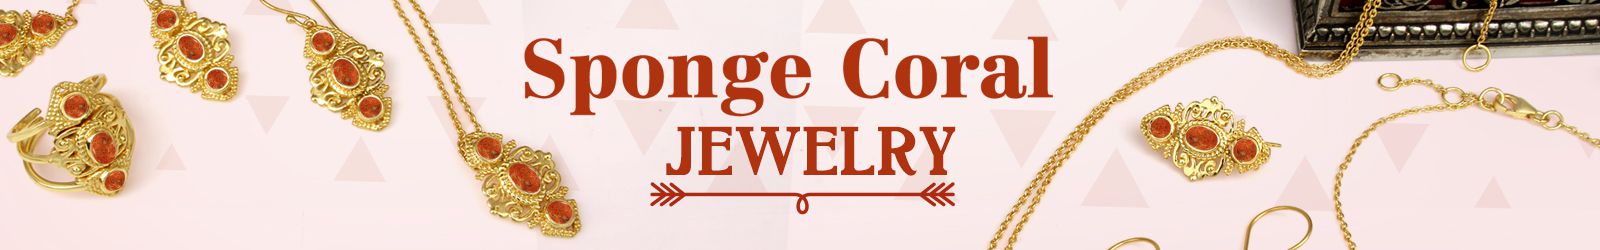 Silver Sponge Coral Jewelry Wholesale Supplier